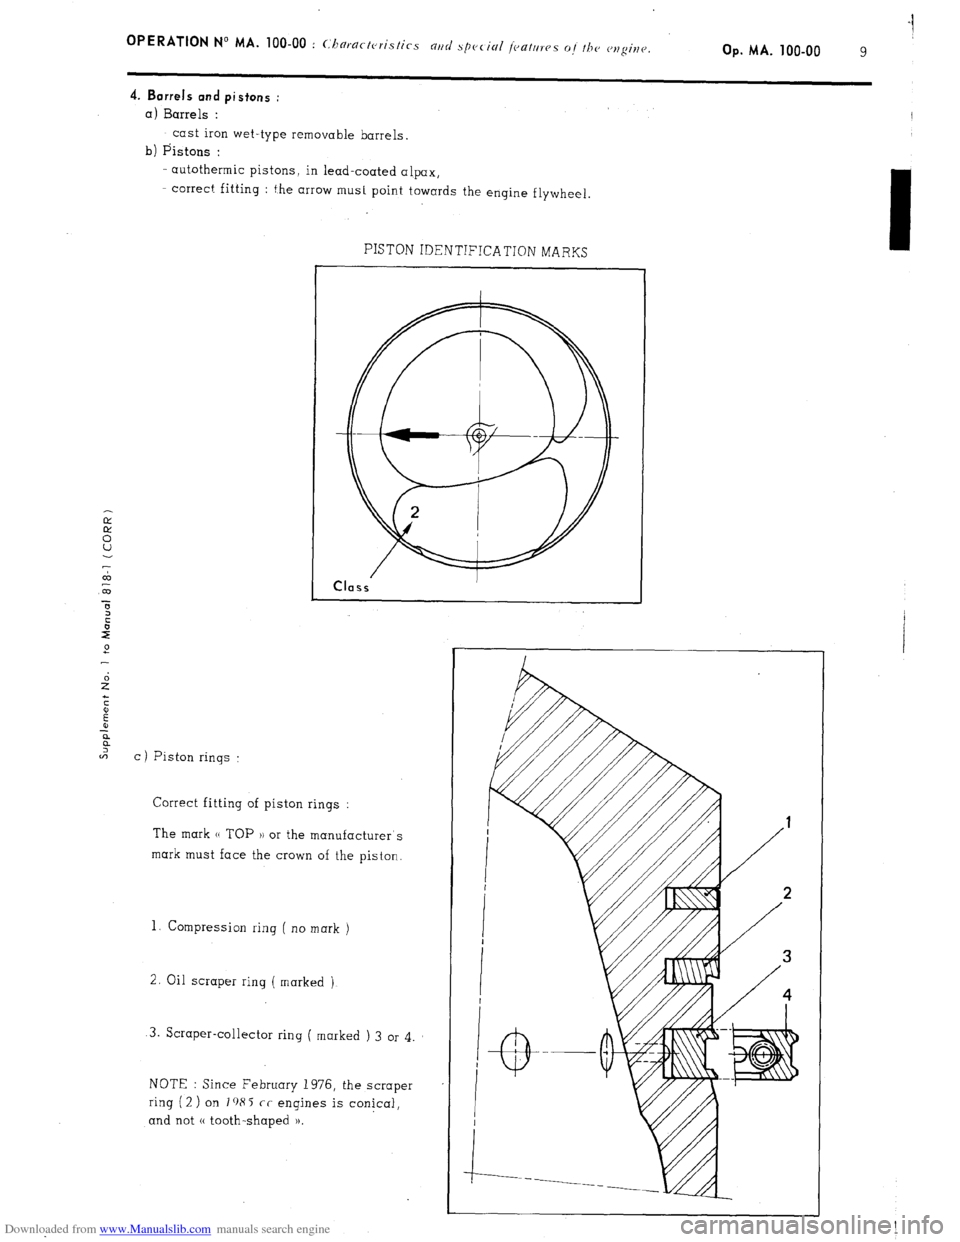 Citroen CX 1974 1.G Workshop Manual Downloaded from www.Manualslib.com manuals search engine OPERATION N” MA. 100-00 : (:hnractc,ri.stics arid specinl j(,atrlres o,/ the> cl,gi?lcJ. Op. MA. 100-00 1 
9 
4. Barrels and pistons : 
a) 
B